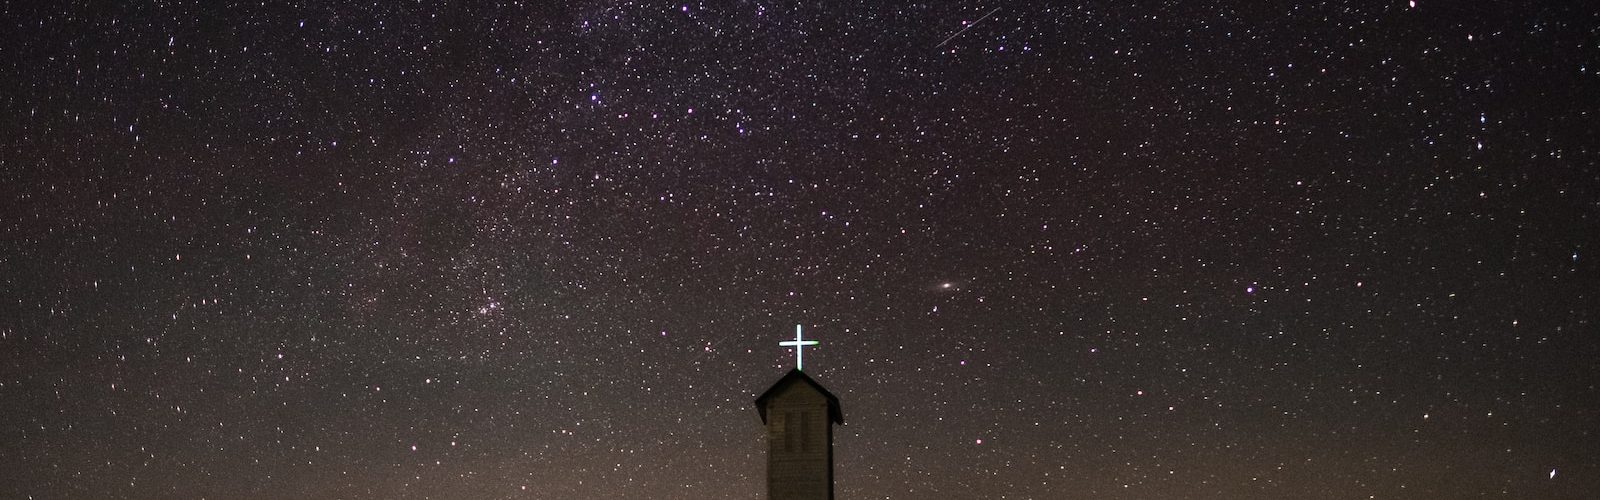 chapel under starry sky